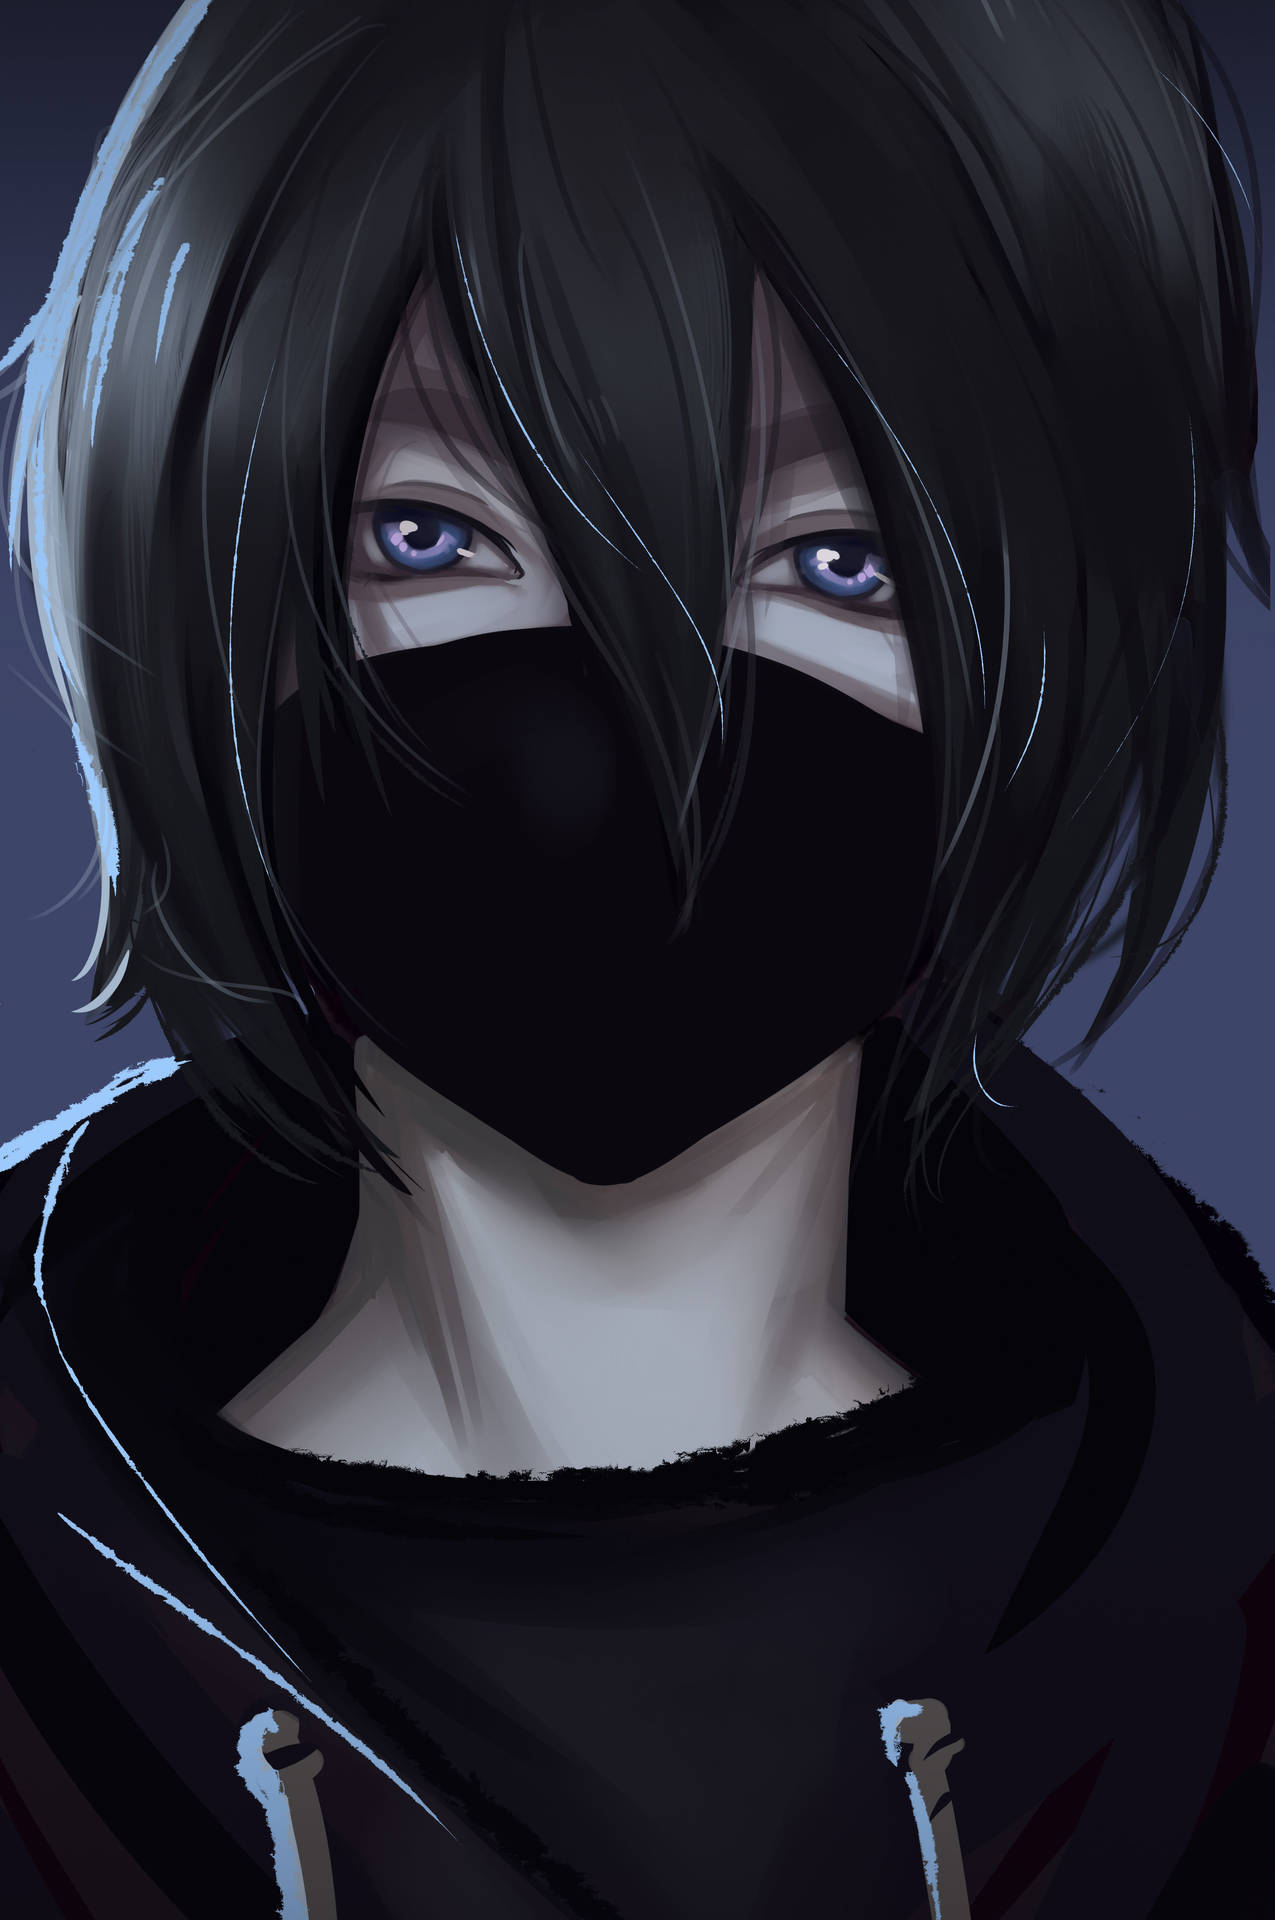 Aesthetic Anime Boy Icon Black Mask